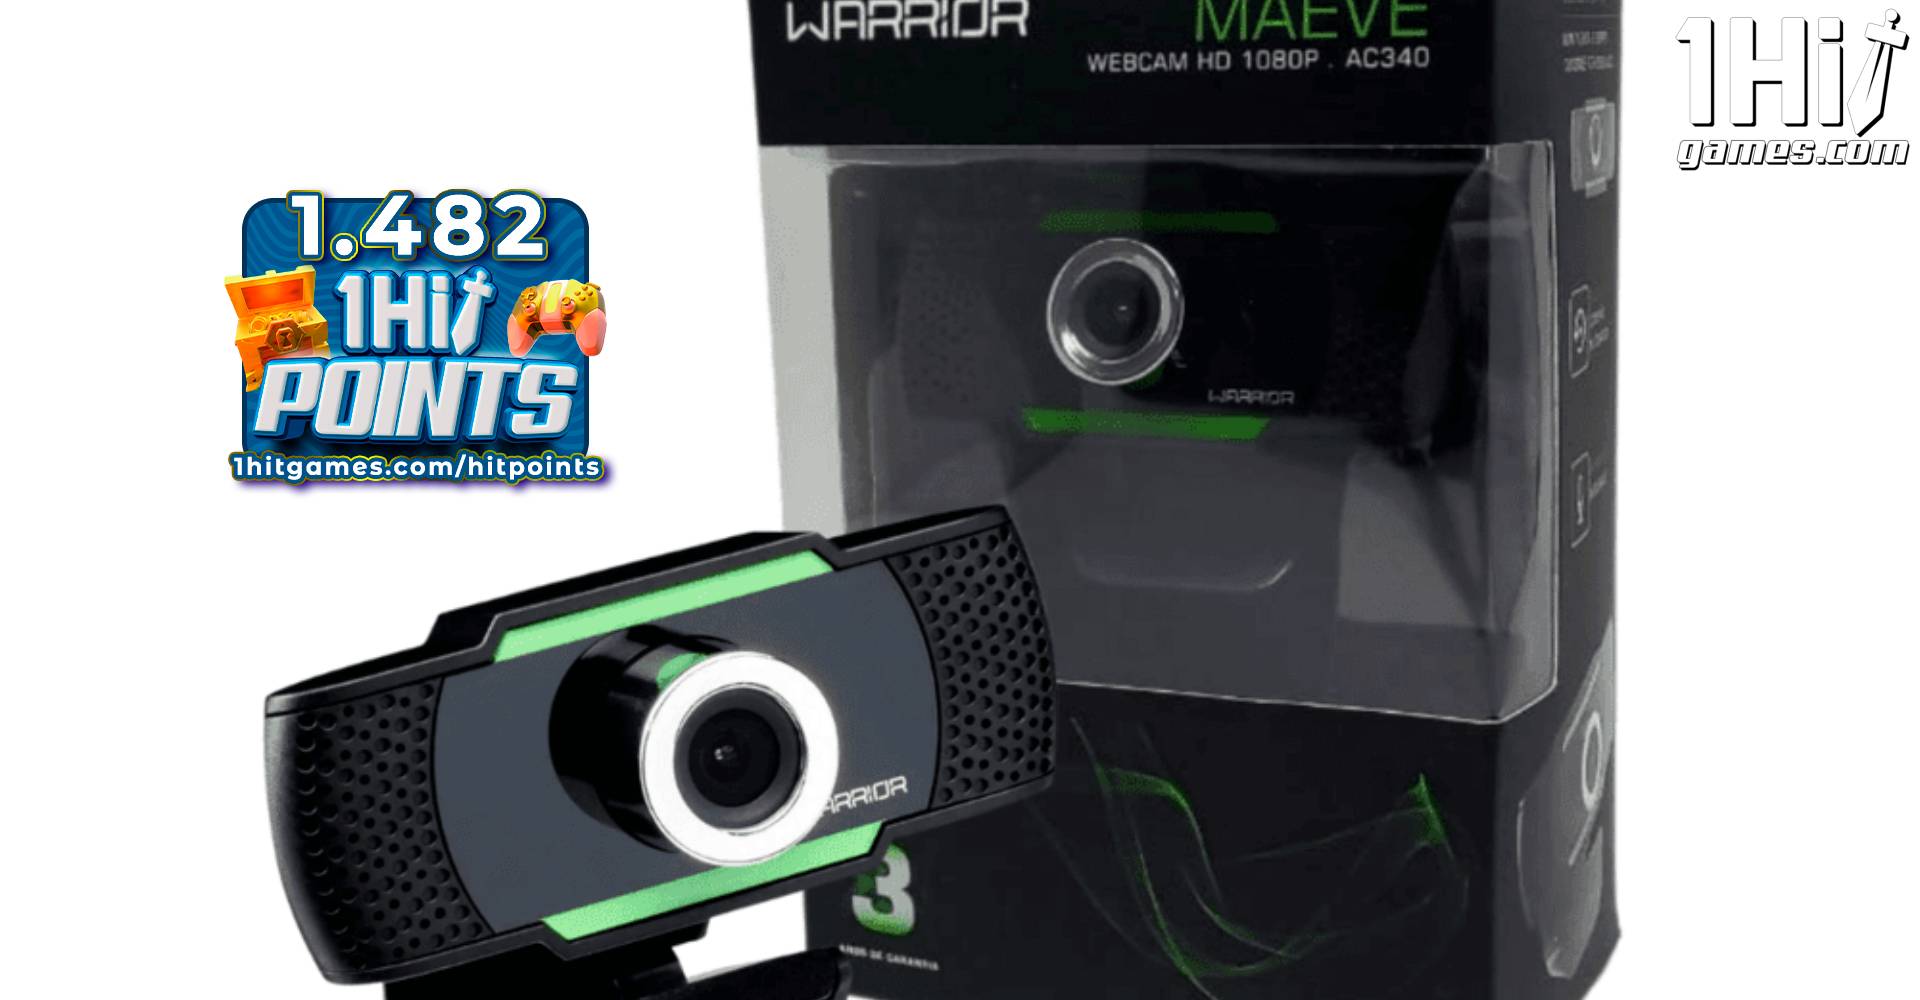 Webcam Gamer Maeve 1080P – AC340 Warrior